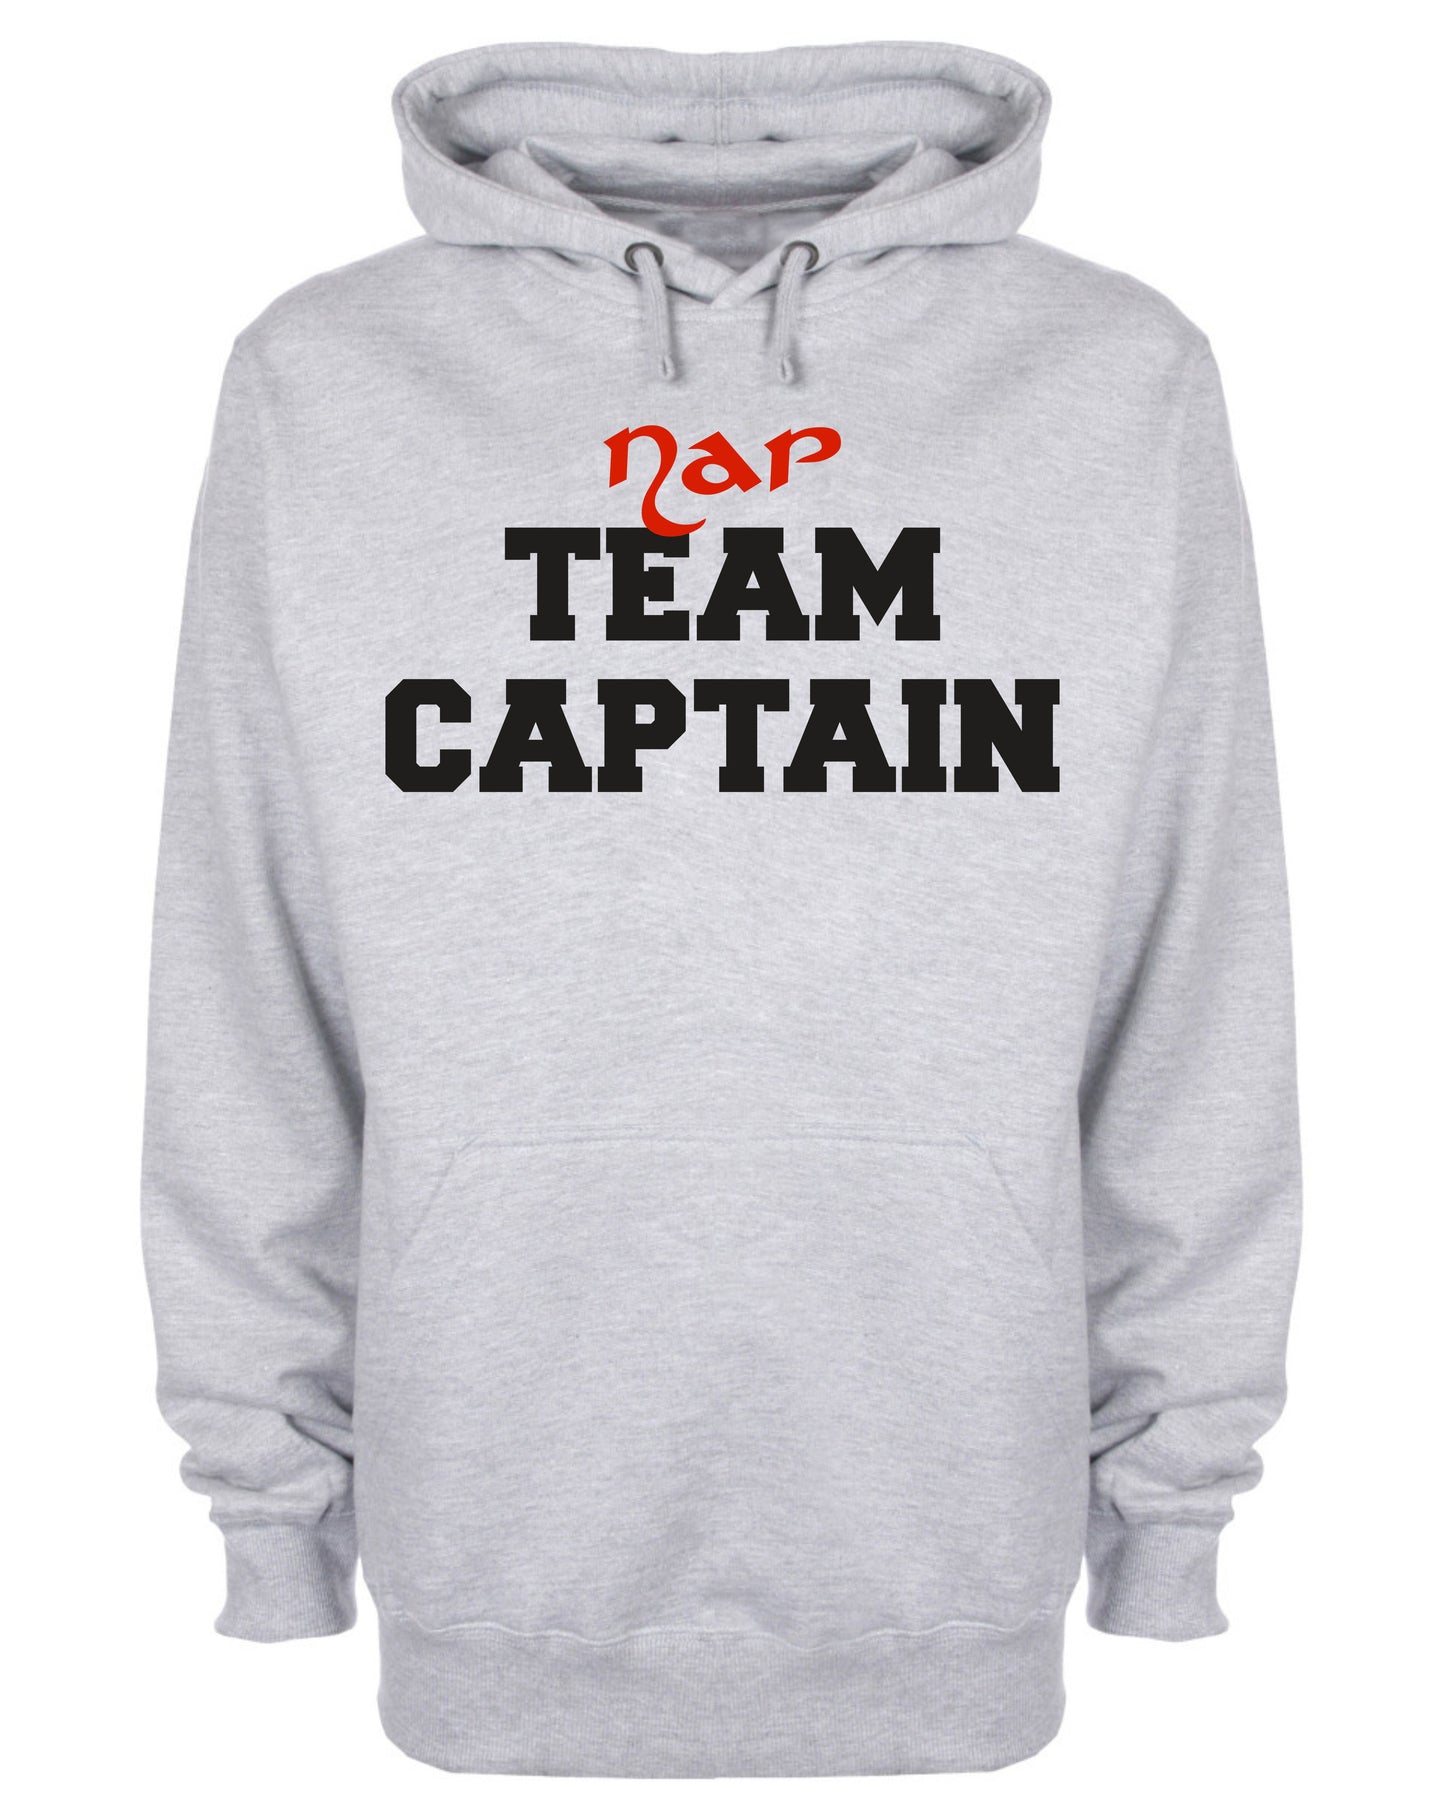 Nap Team Captain Funny Slogan Hoodie